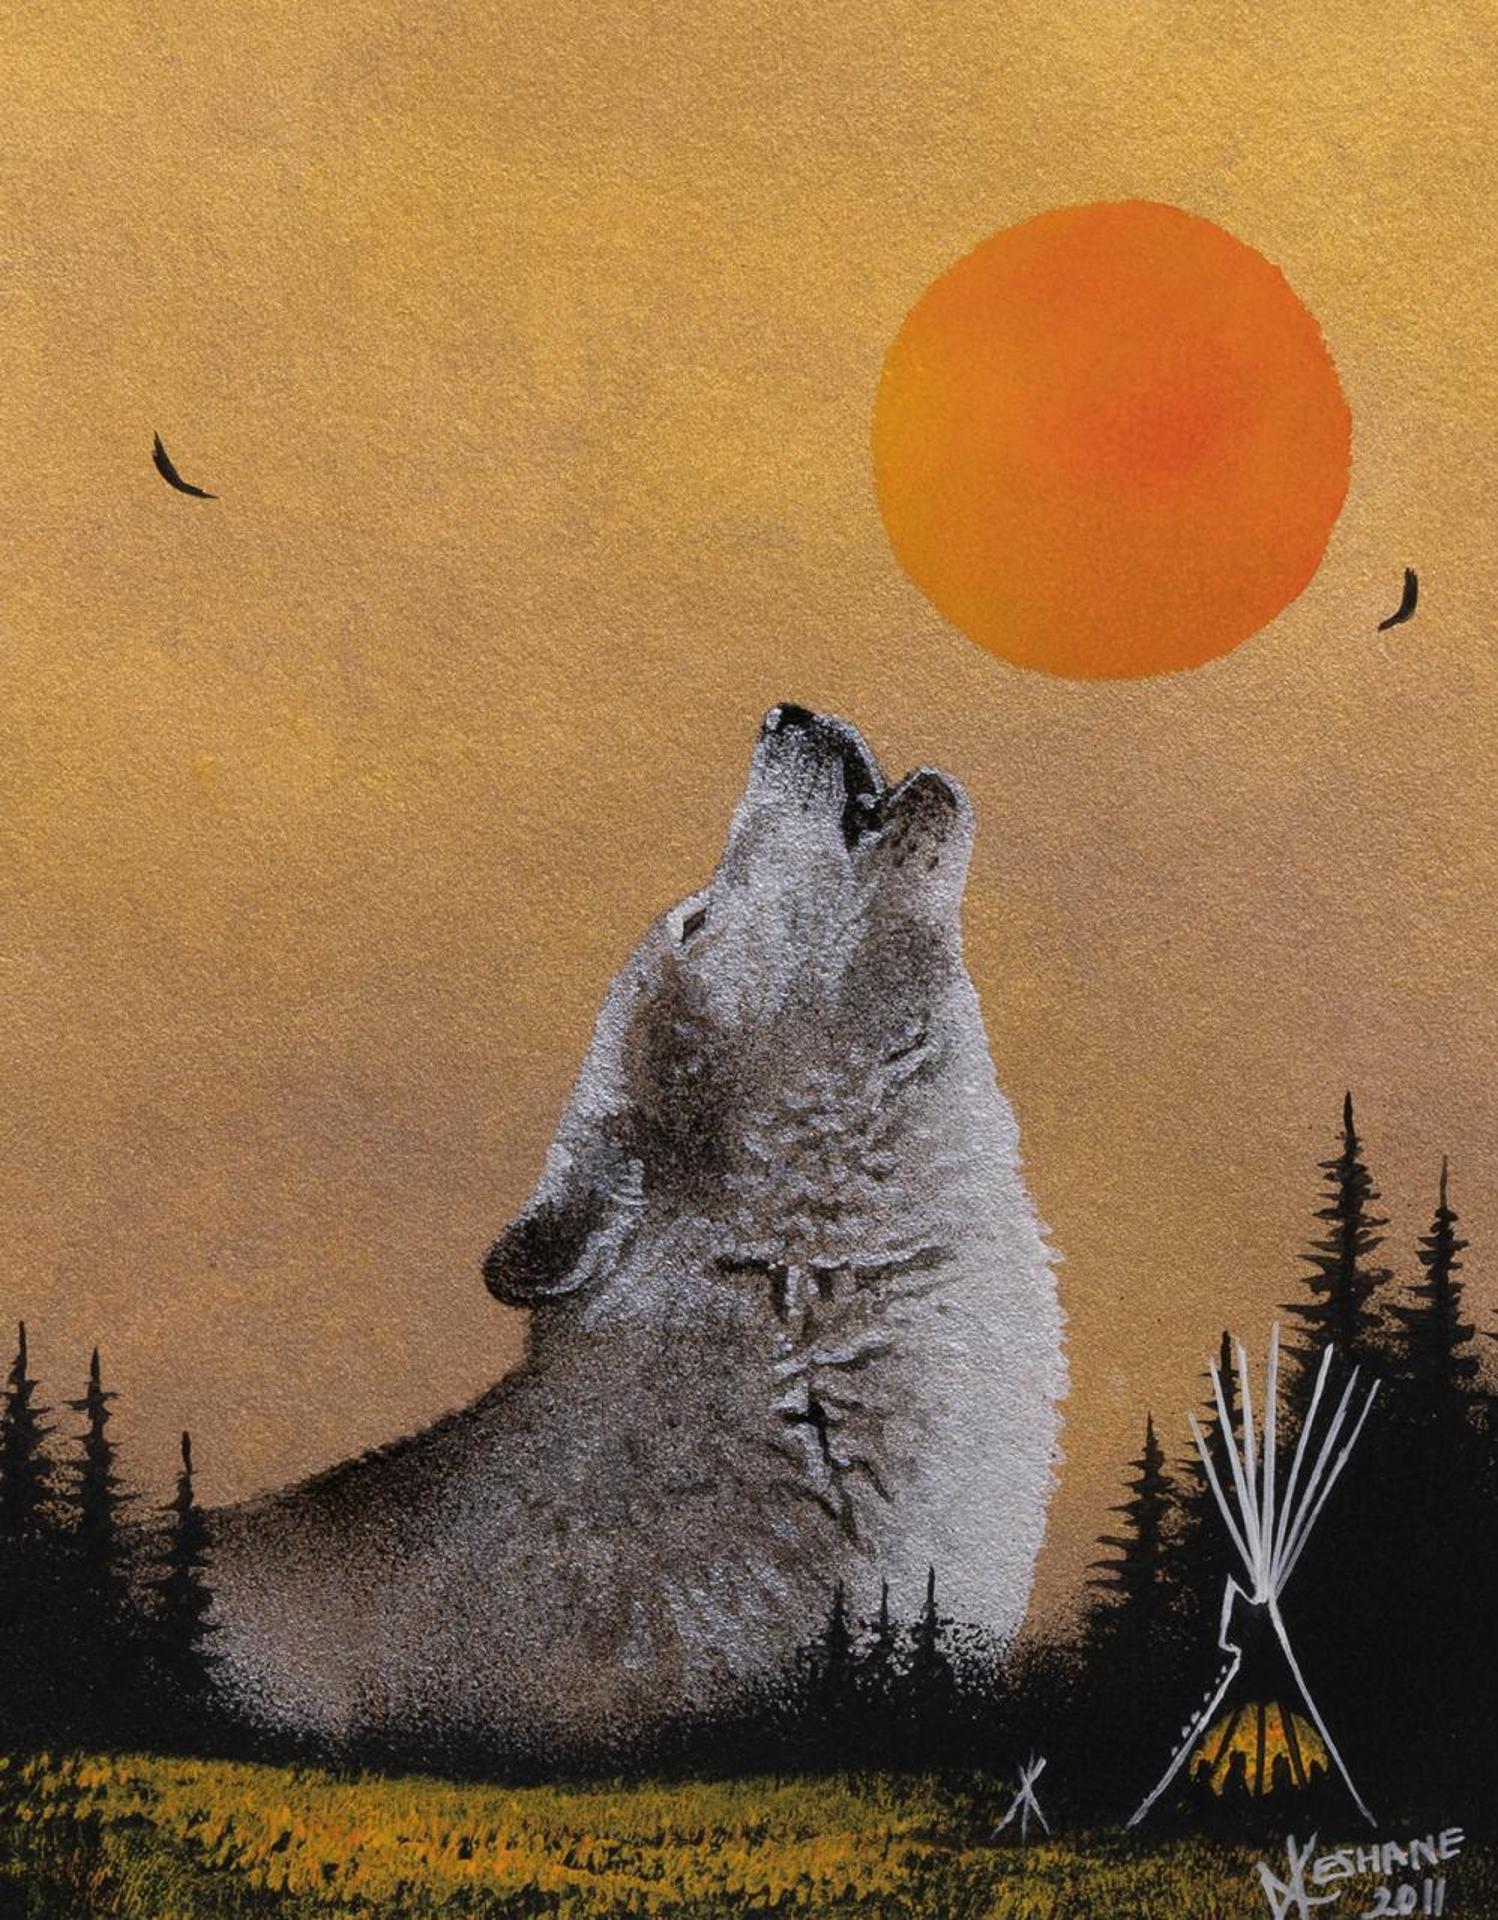 Darwin Keshane - Untitled - Howling Wolf